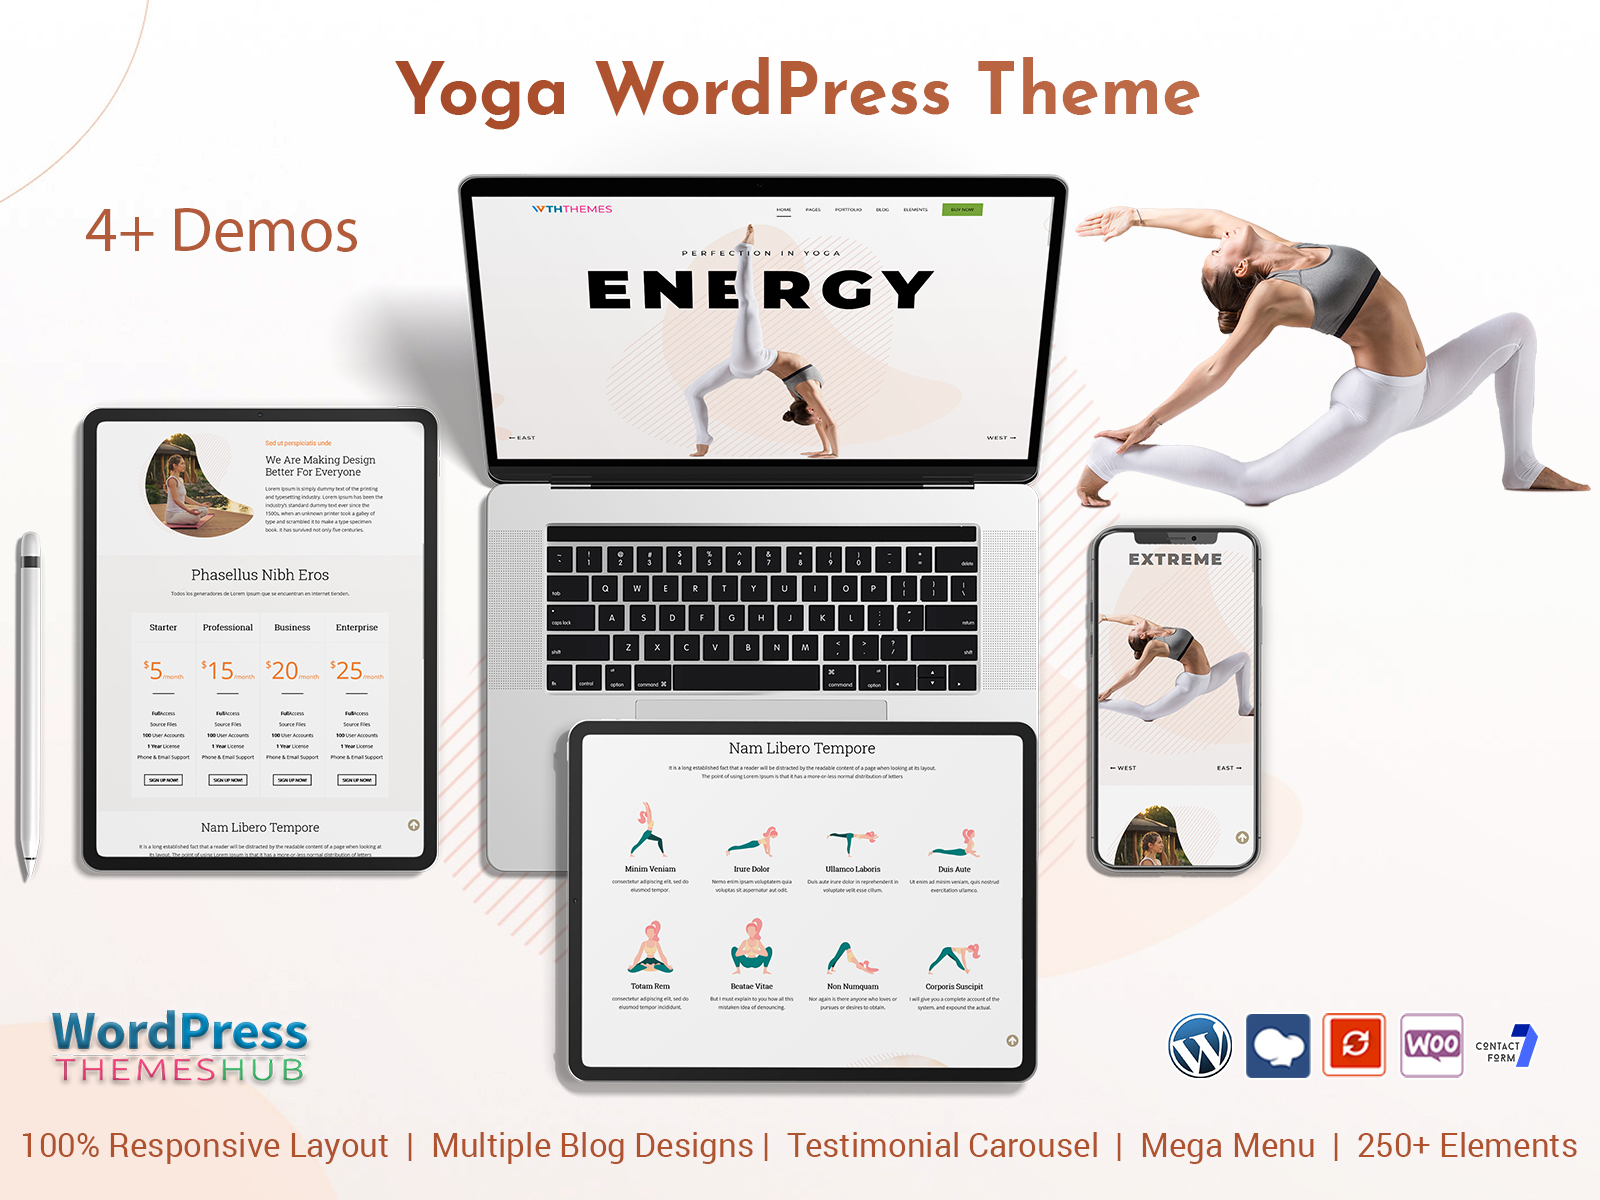 Yoga WordPress Theme For Yoga Studio Websites